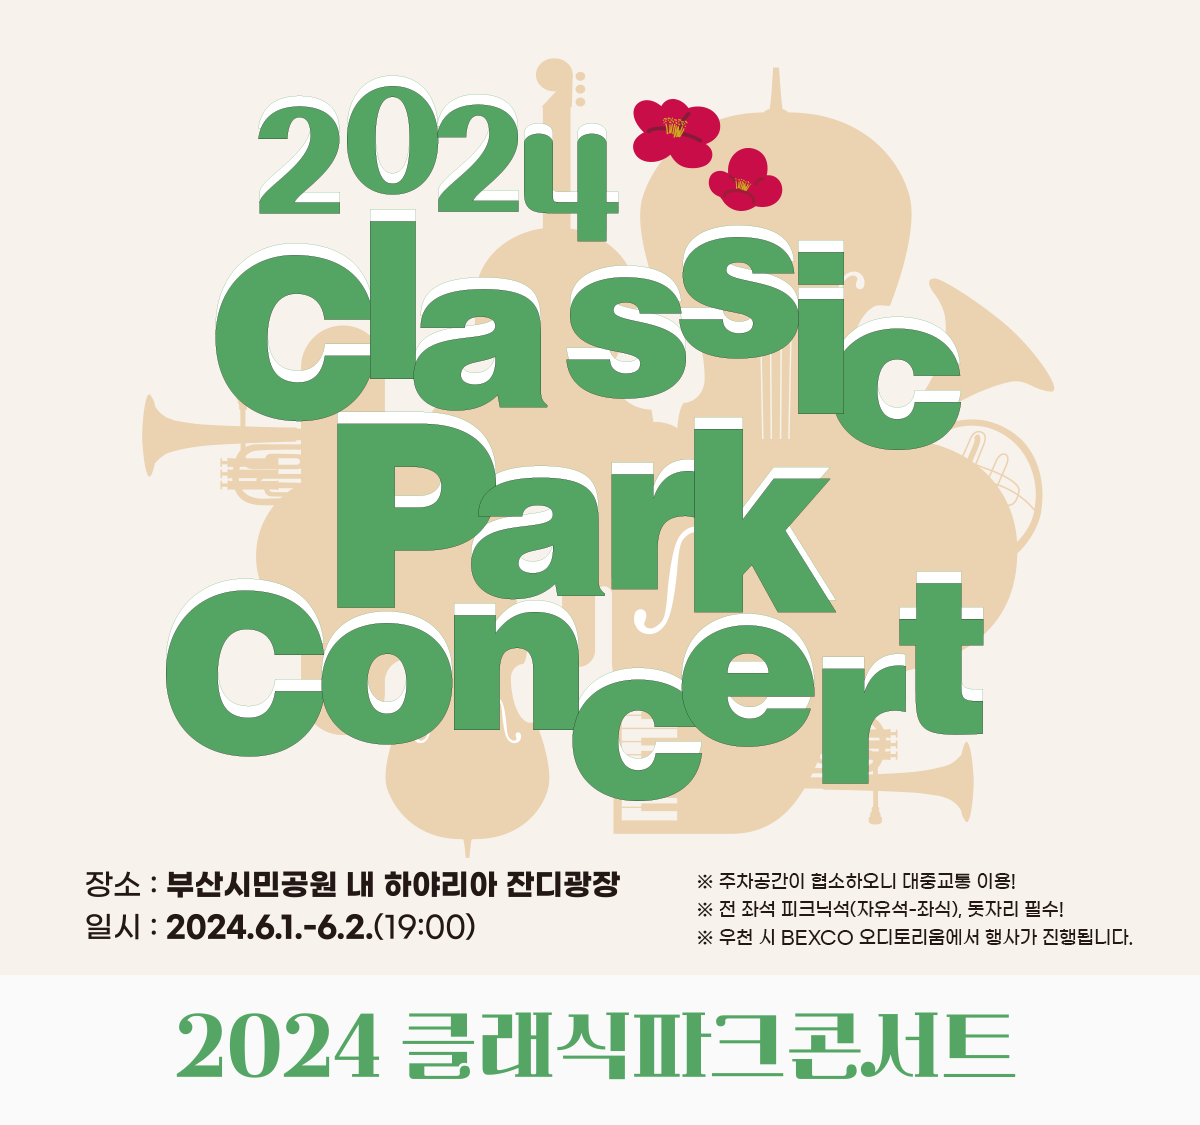 2024 Classic Park Concert / 장소 : 부산시민공원 내 하야리아 잔디광장 / 일시 : 2024.6.1 - 6.2 (19:00~21:00)